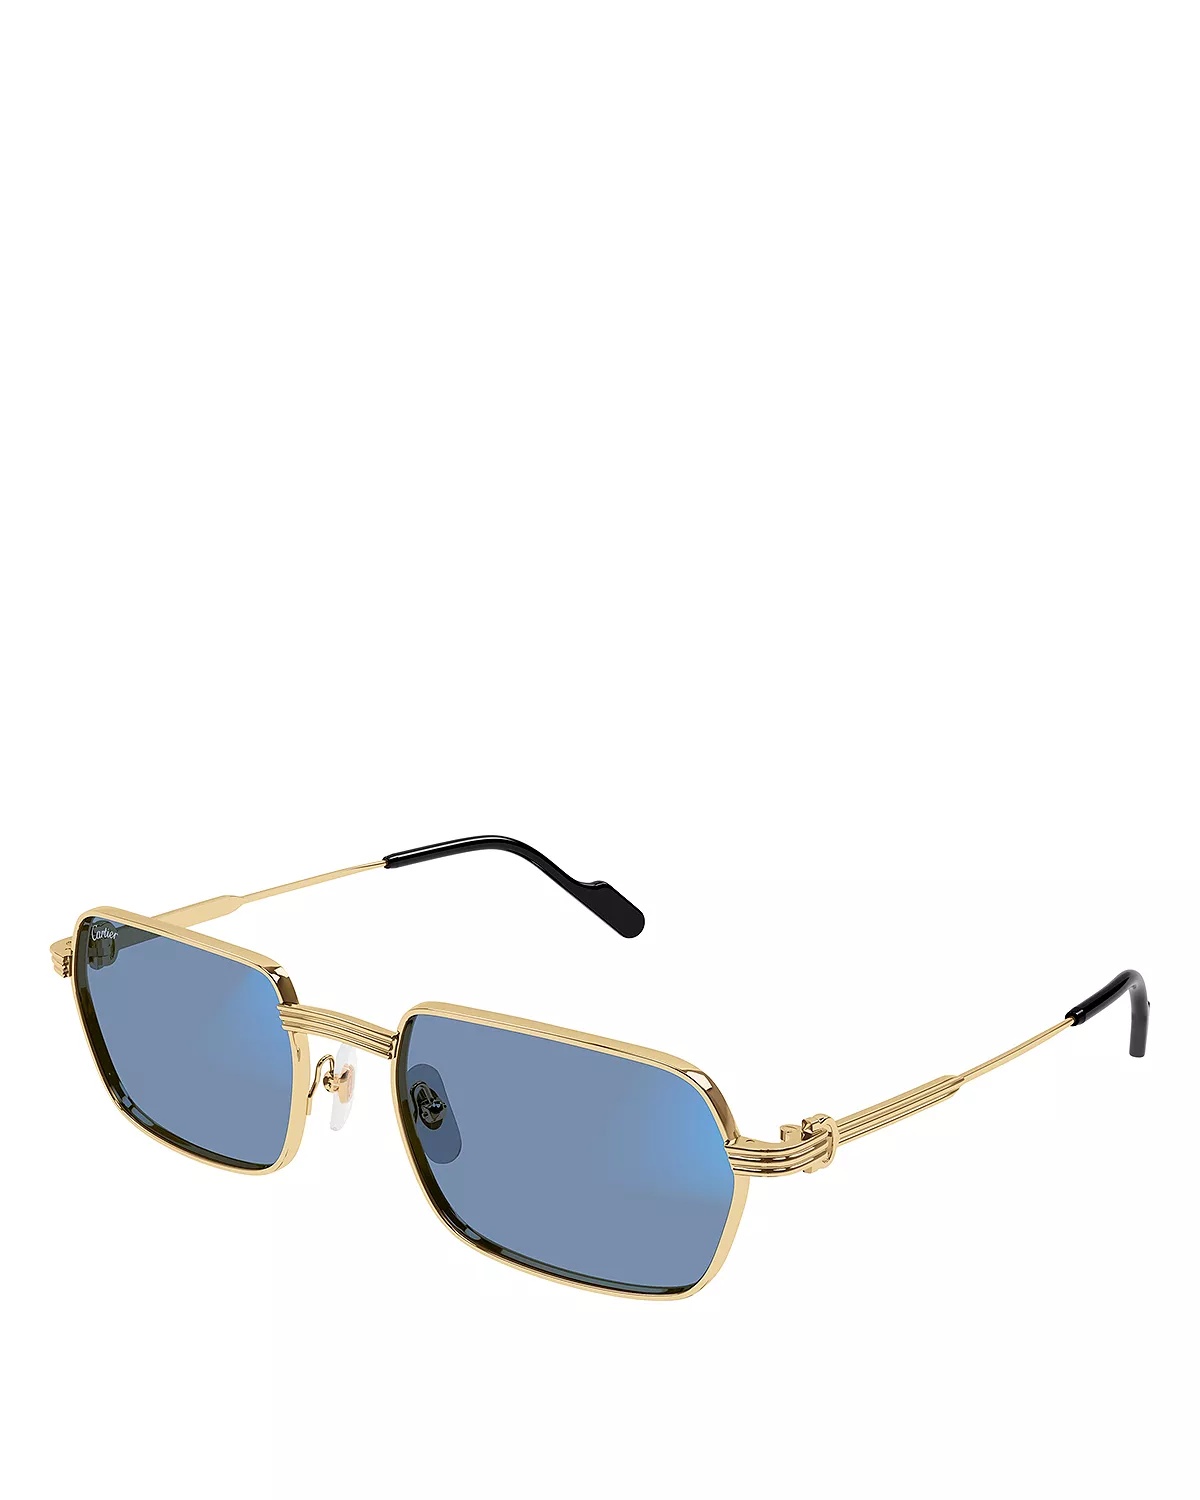 Premiere De Cartier 24 Carat Gold Plated Photochromatic Rectangular Sunglasses, 56mm - 2